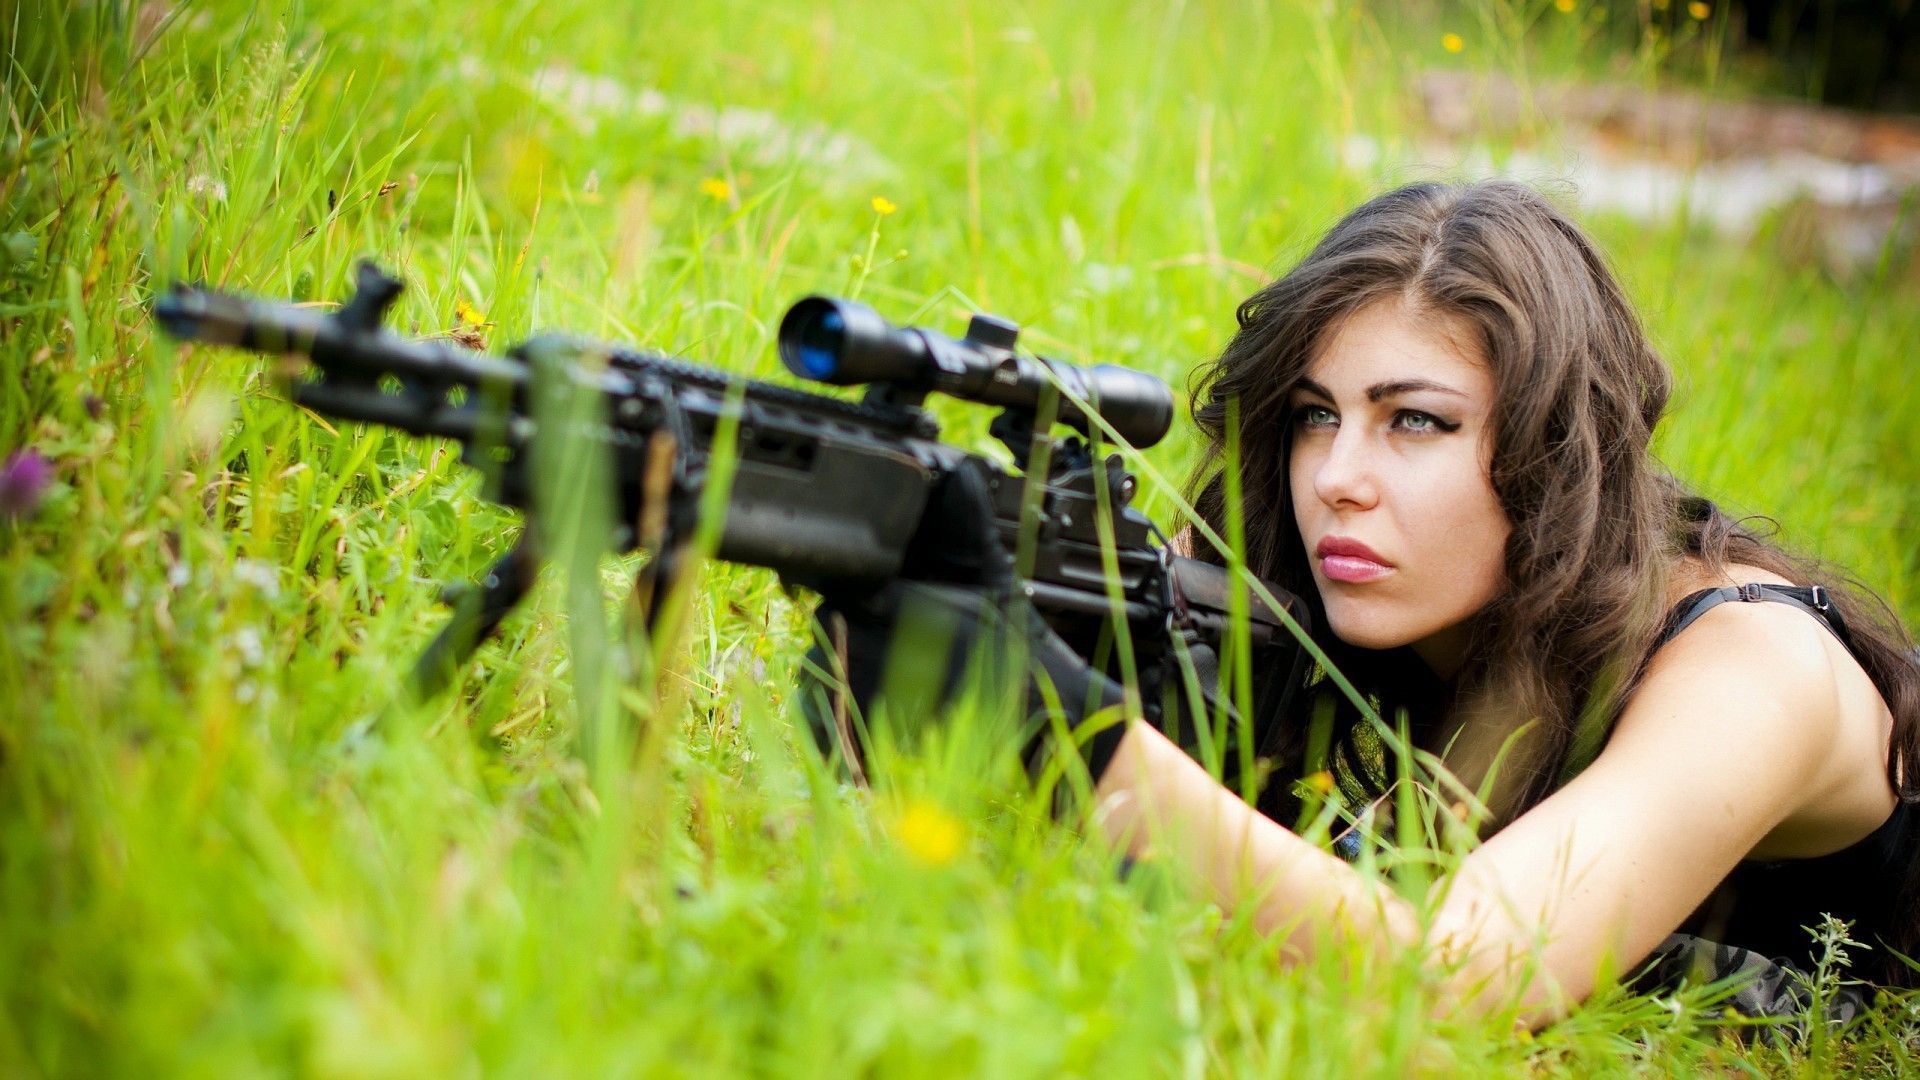 Sniper Girl wallpaper, Video Game, HQ Sniper Girl pictureK